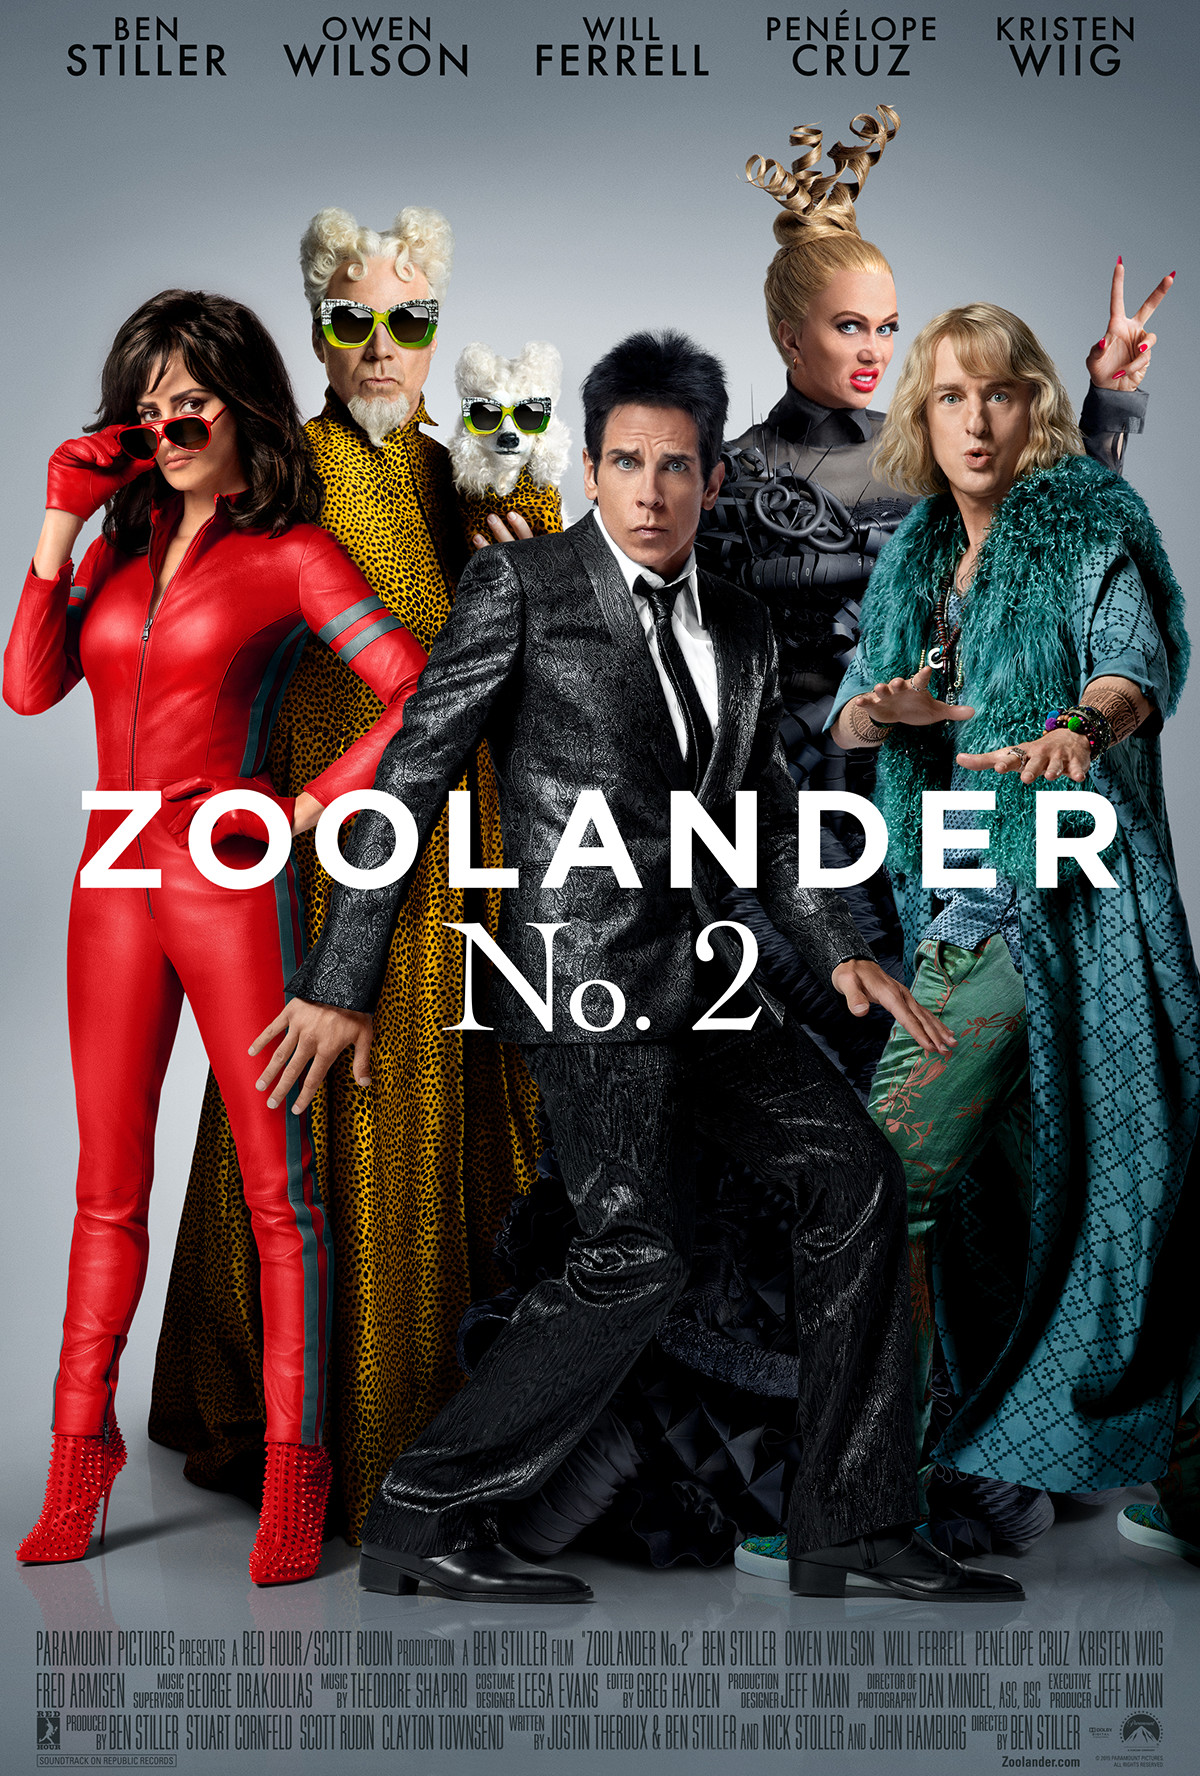 Zoolander 2 Theatrical Review Zoolander 2 2016 Flickdirect